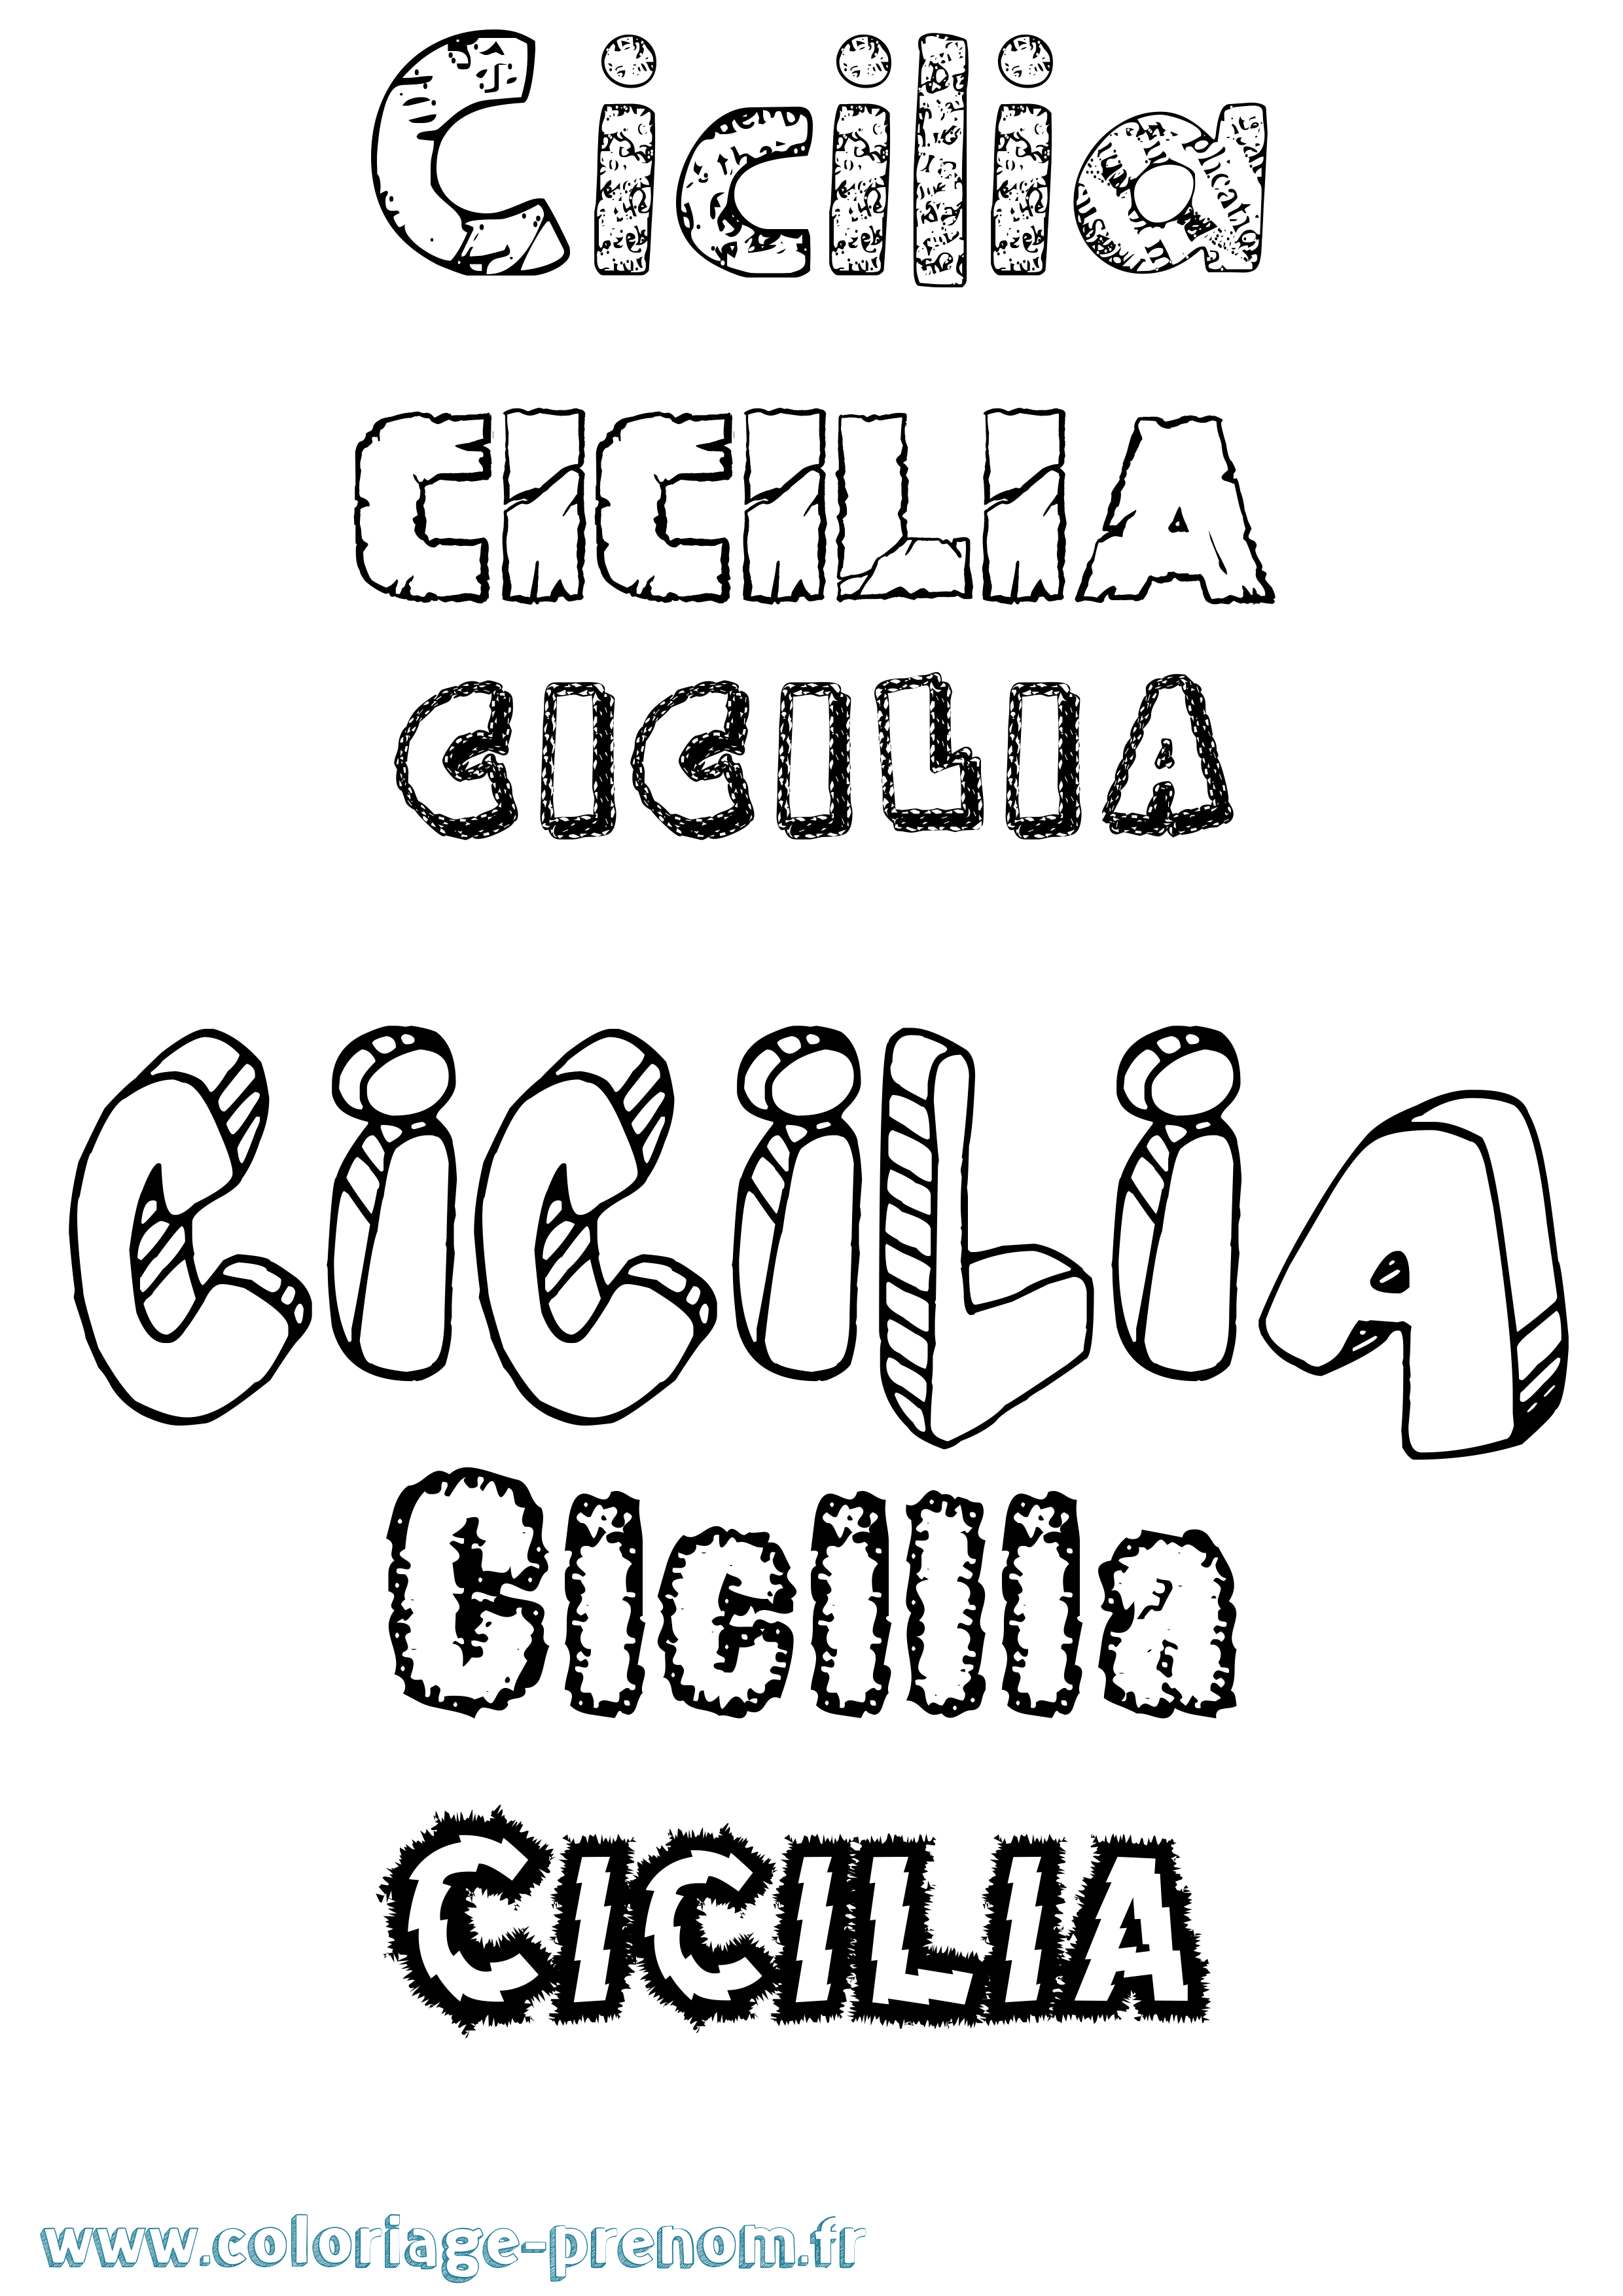 Coloriage prénom Cicilia Destructuré